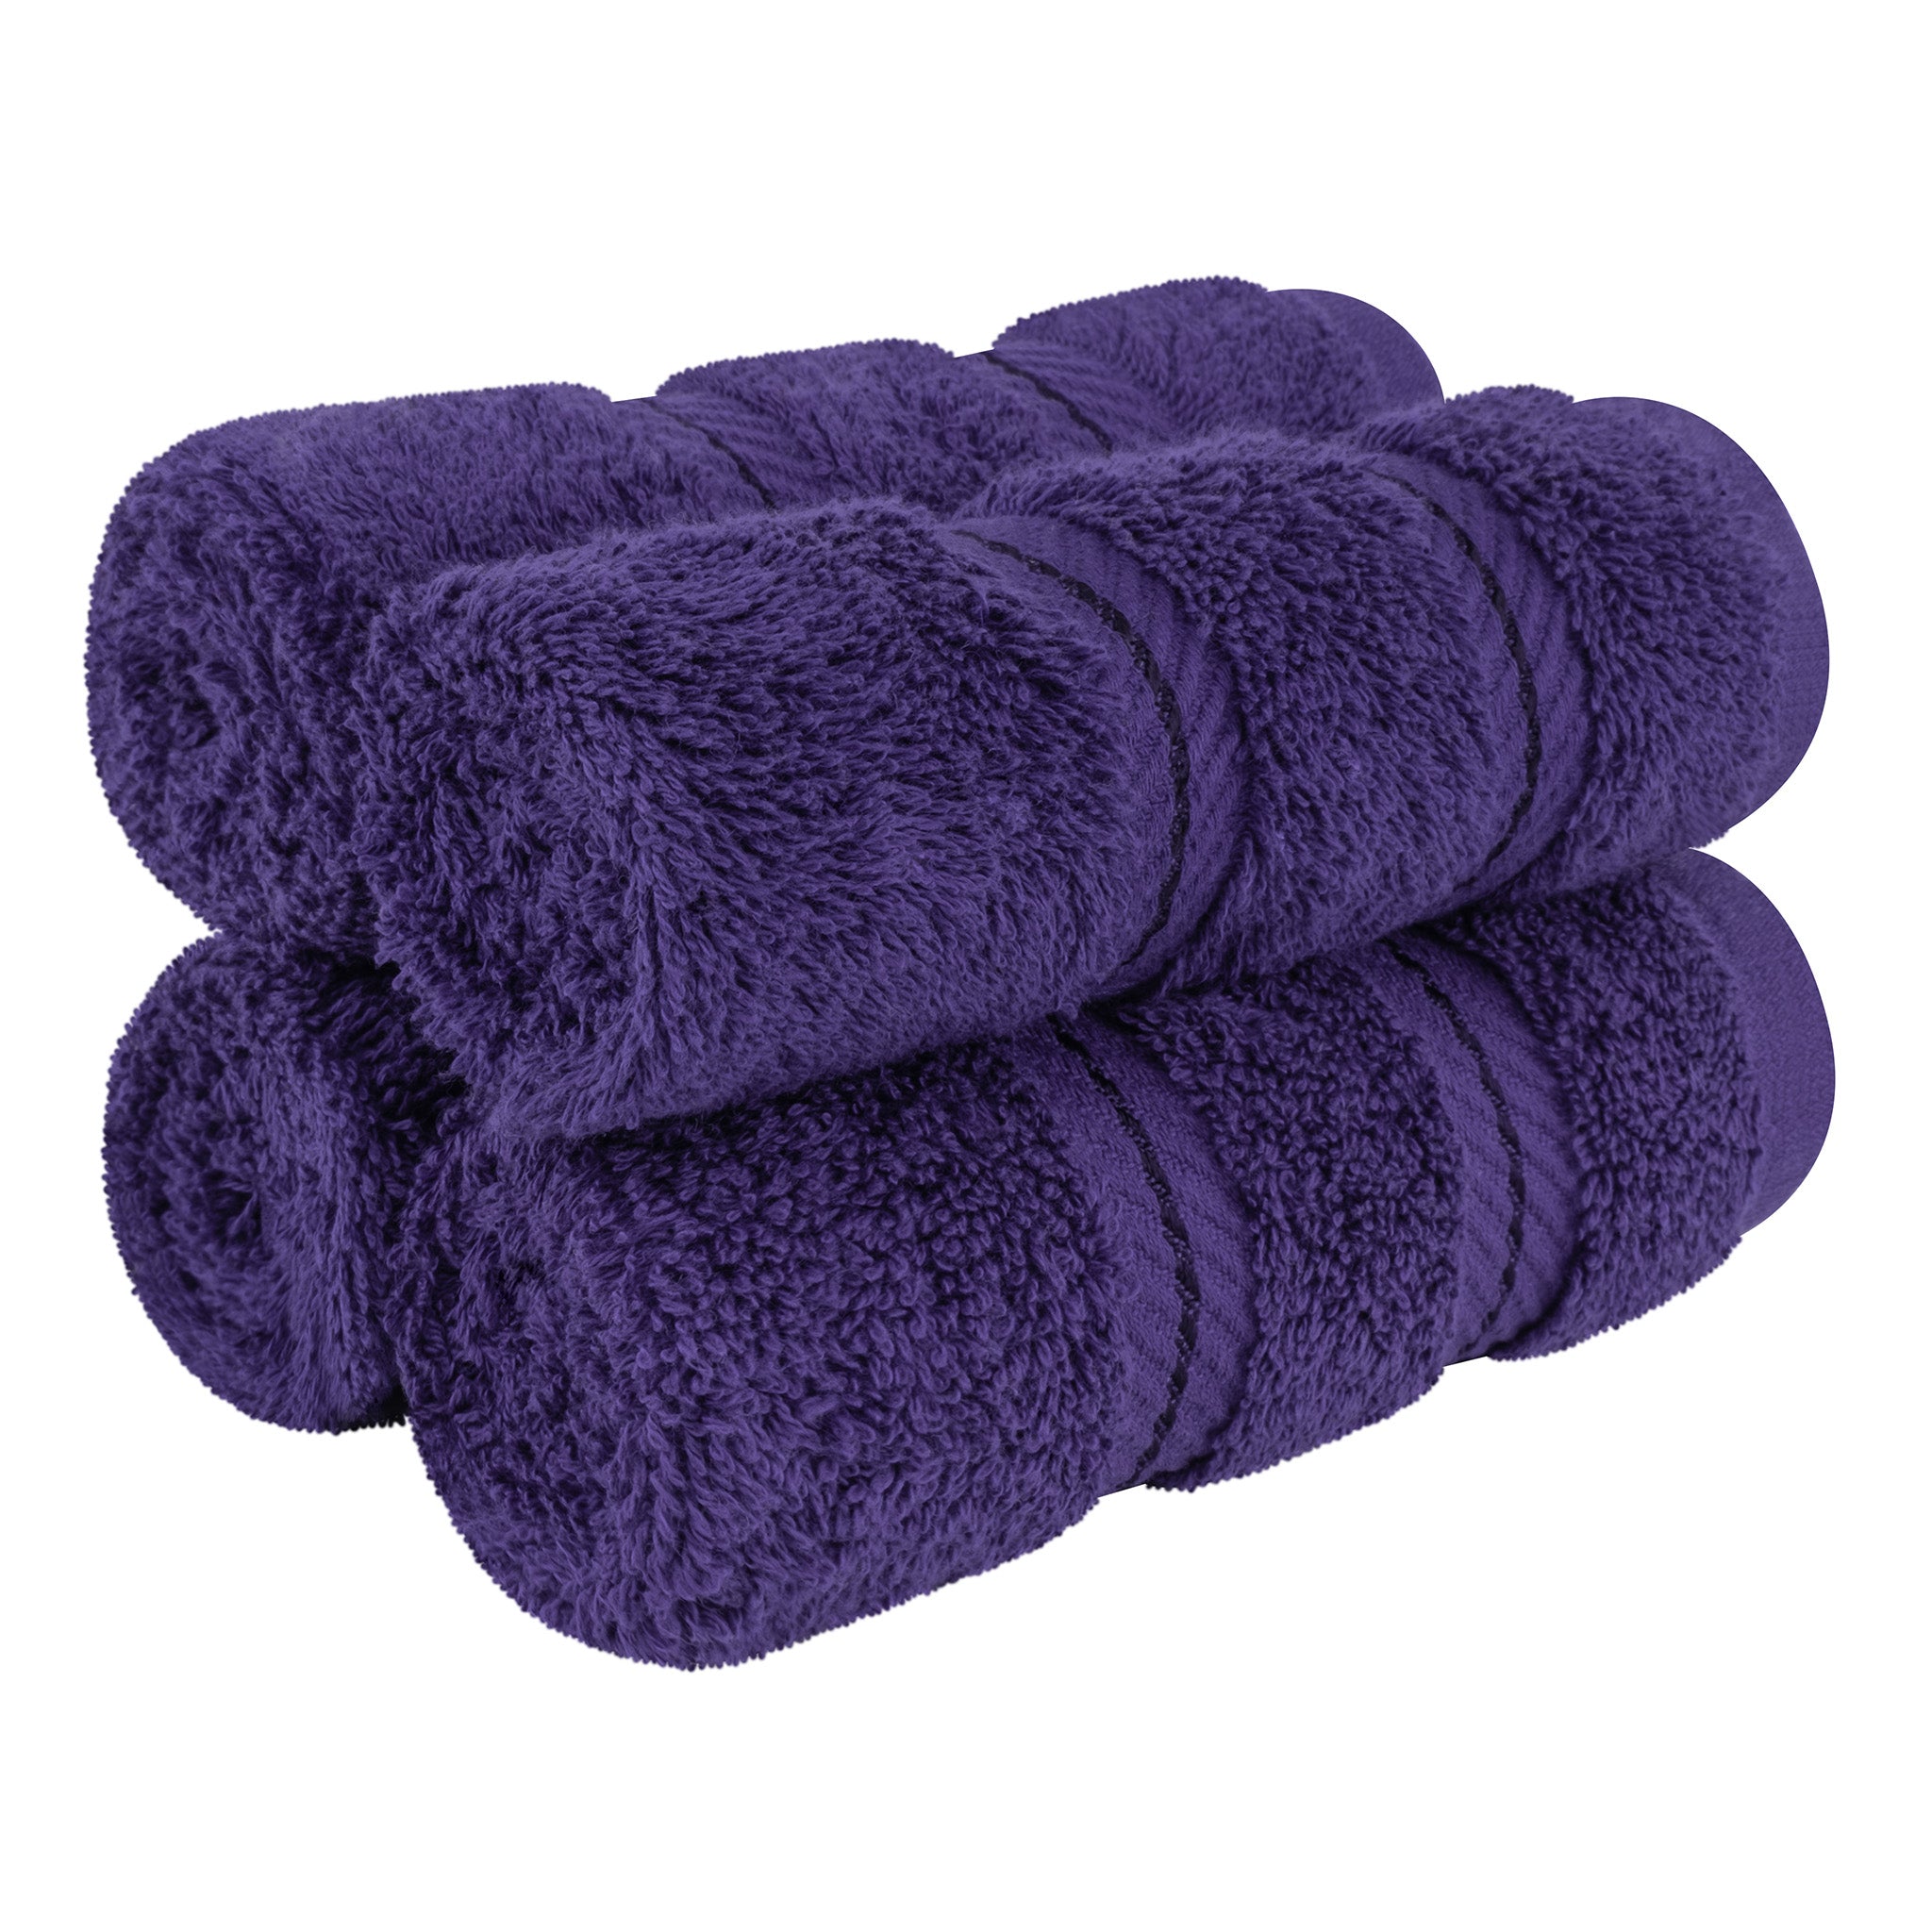  American Soft Linen 100% Turkish Cotton 4 Piece Washcloth Set - Wholesale - purple-1